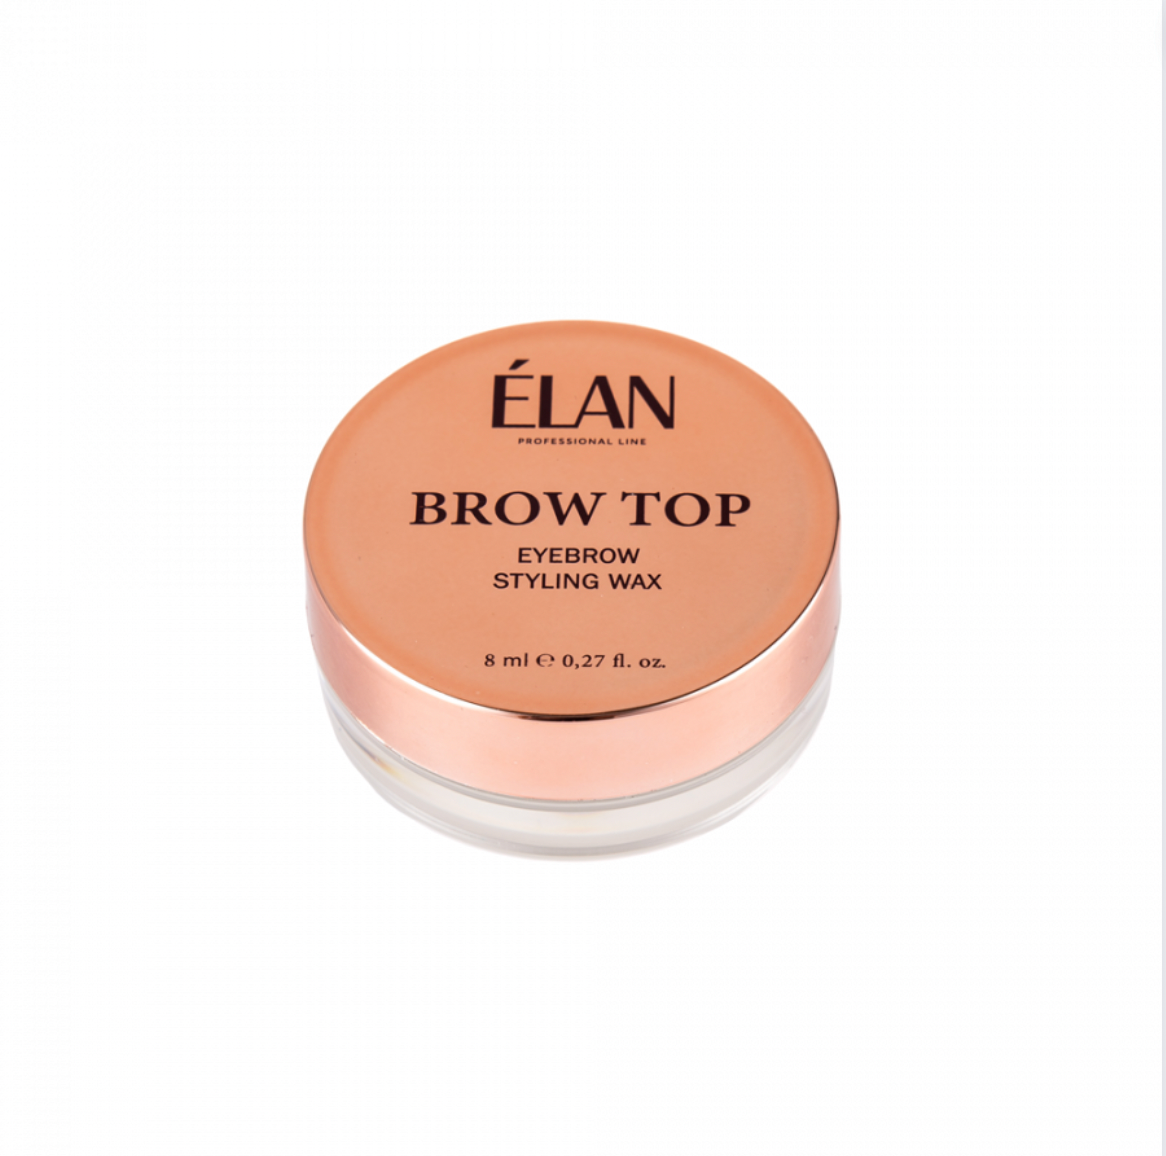 ÉLAN - Brow Top - Eyebrow Styling Wax, 8ml